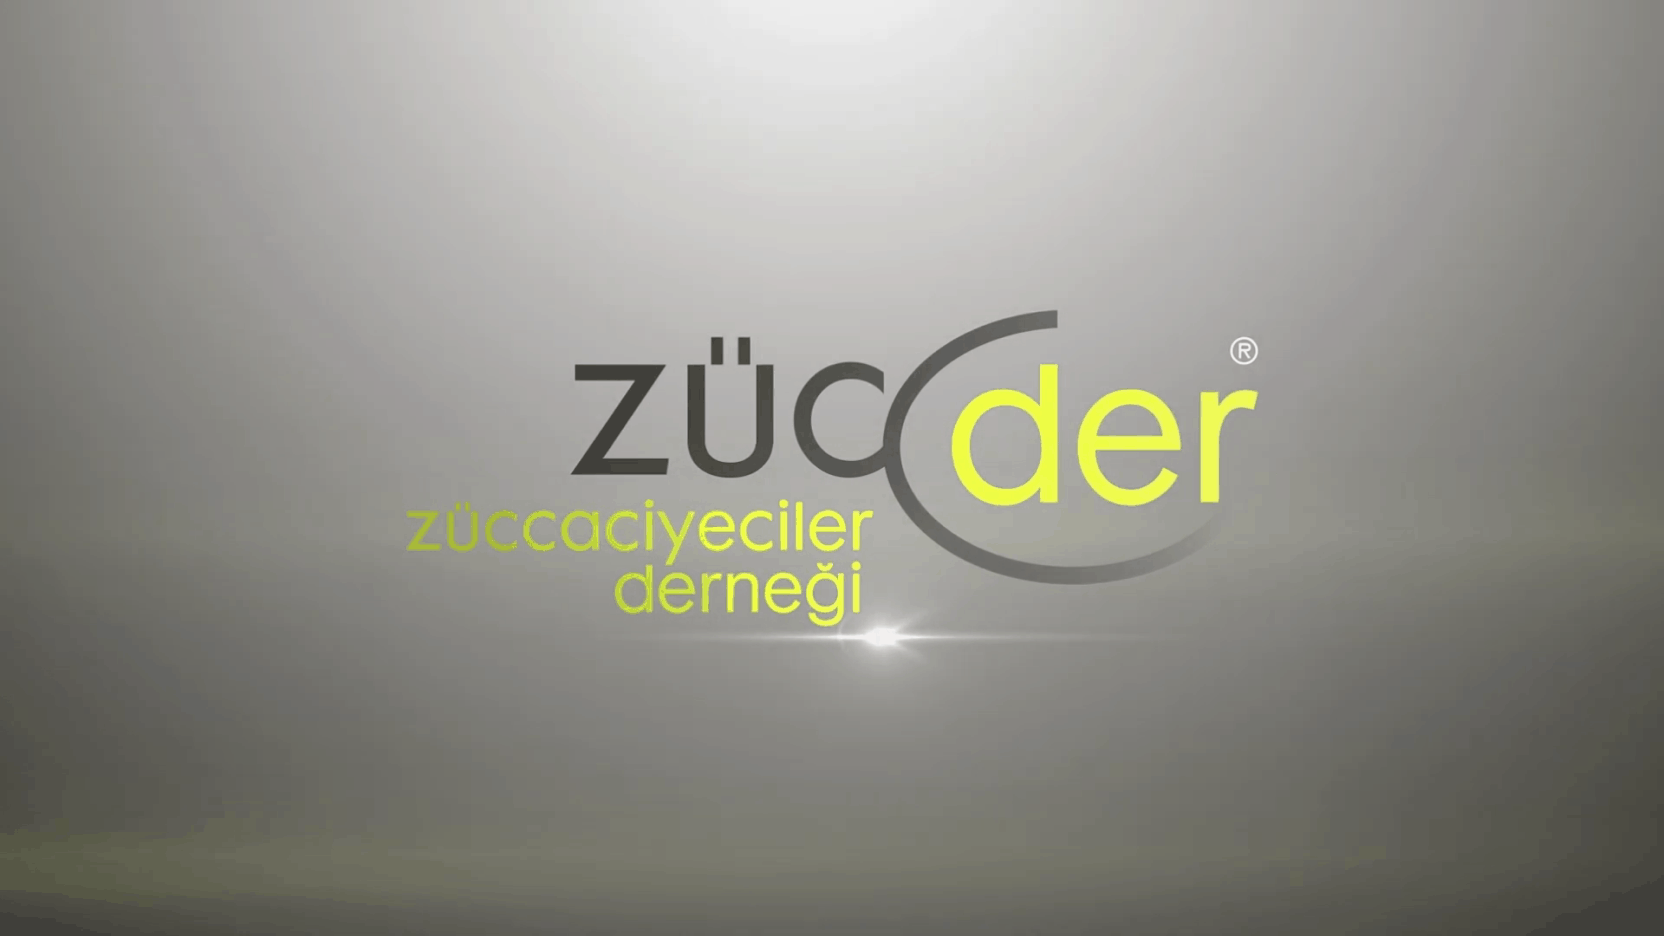 Akkun Dış Tic. Ltd. Şti. – ZUCDER